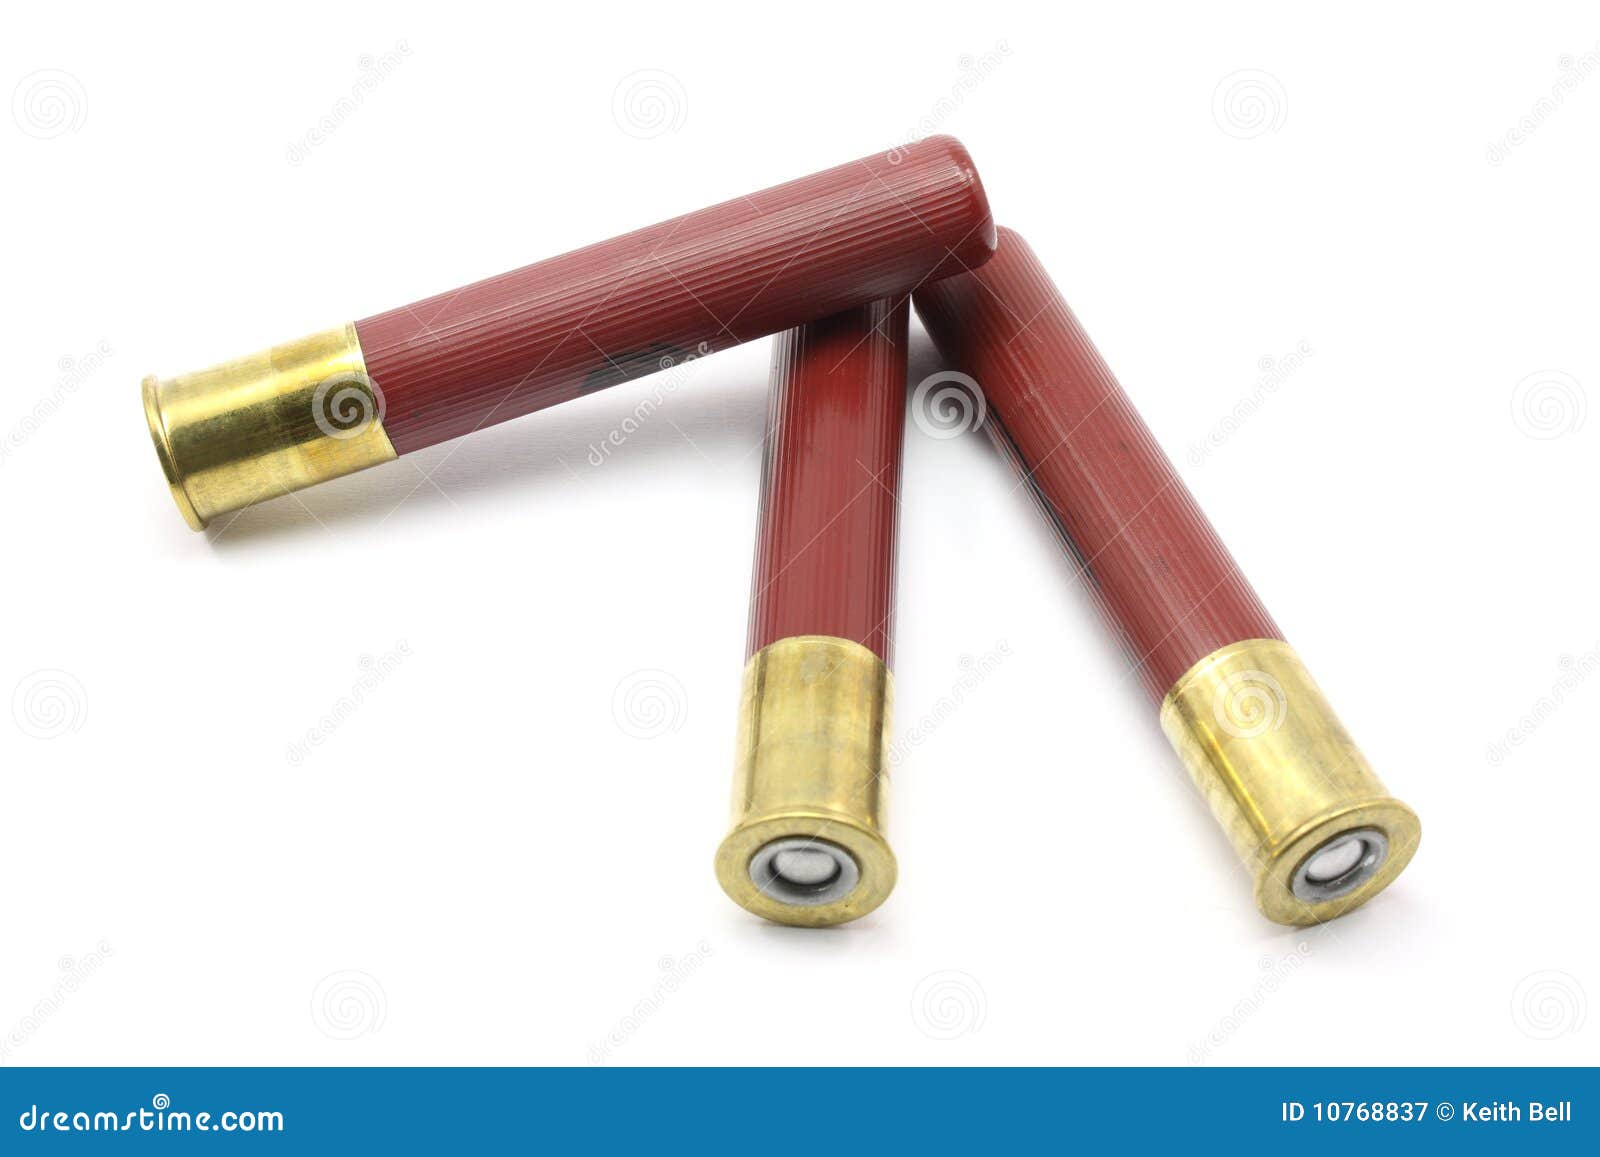 410 Shot Gun shells stock image. Image of hunting, ammunition - 10768837